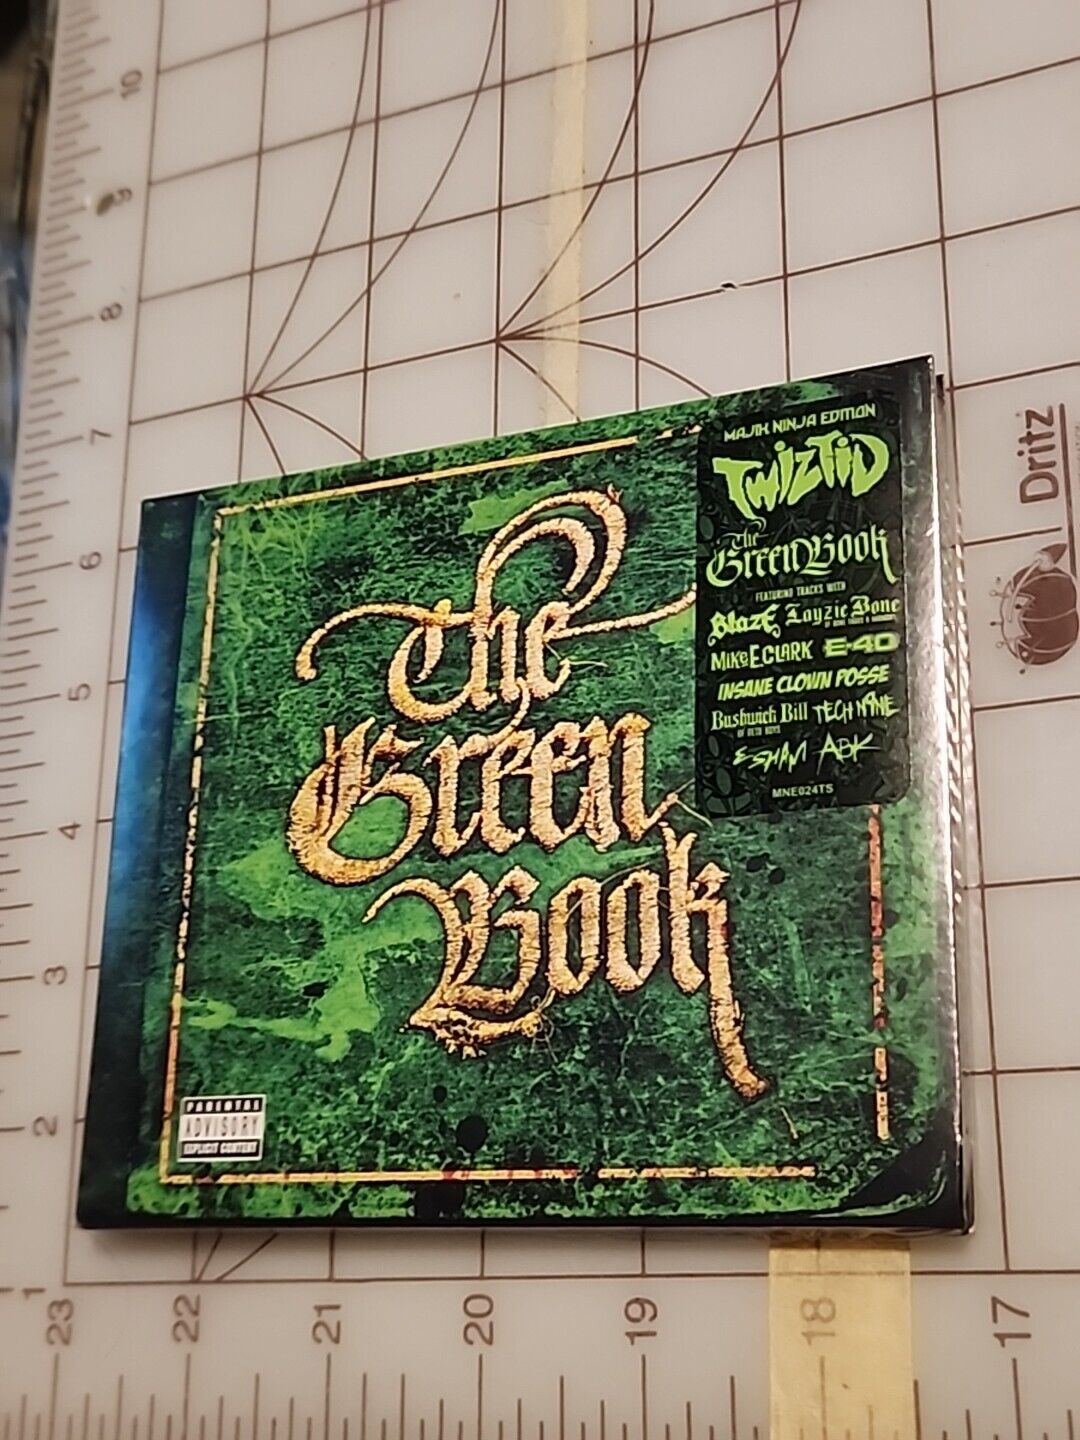 CD Twiztid The Green Book SEALED E-40 tech n9ne esham MNE insane clown posse NEW